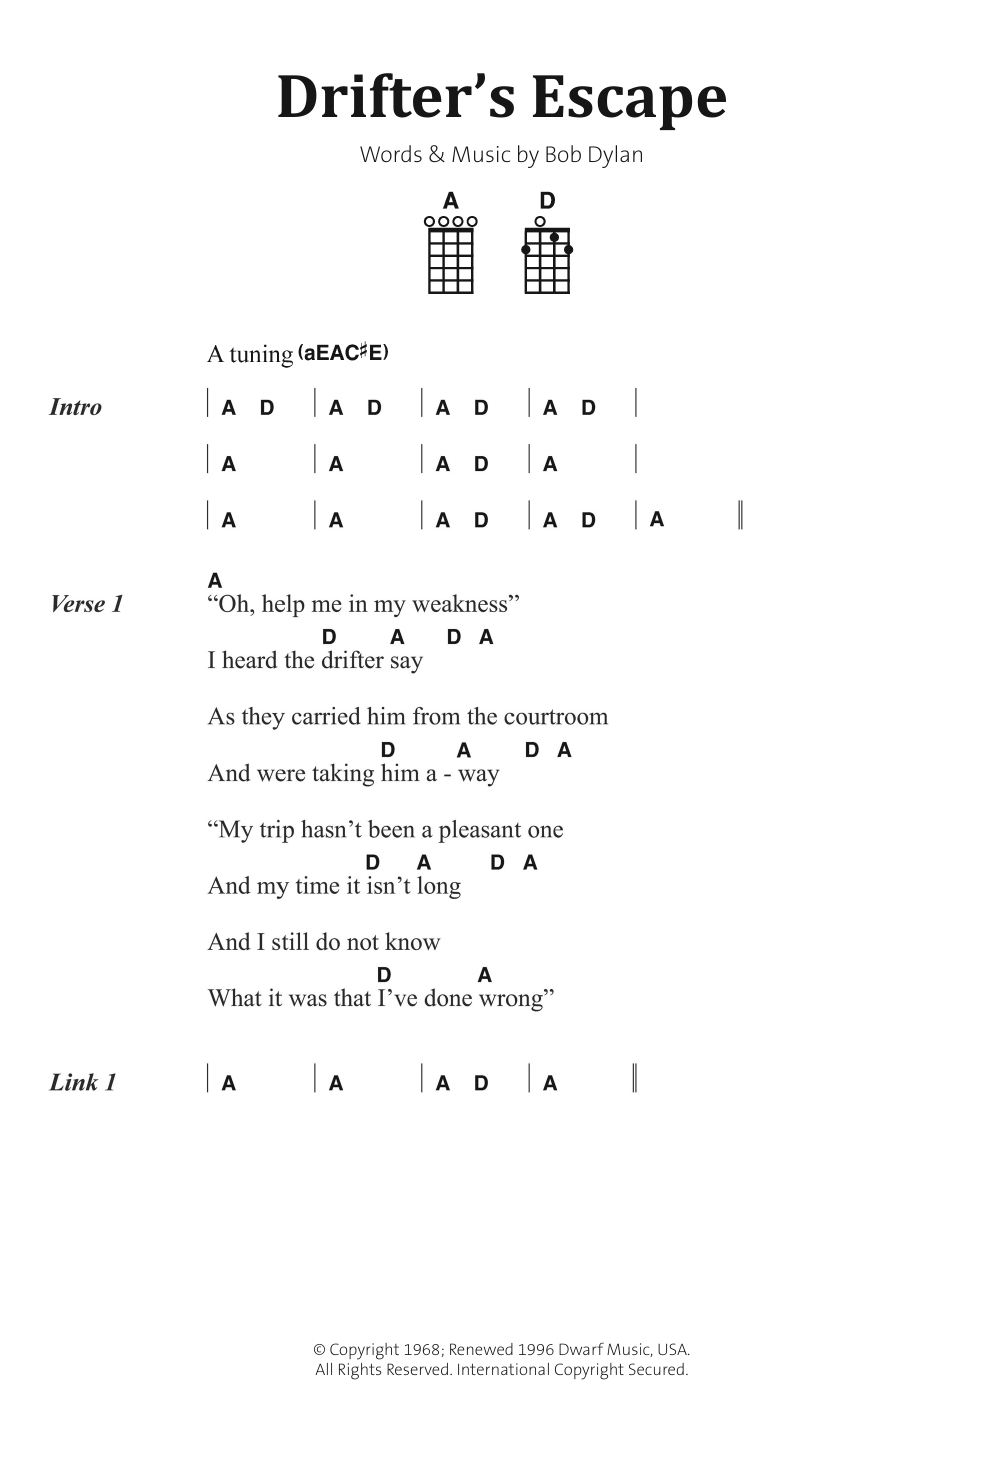 Bob Dylan Drifter's Escape Sheet Music Notes & Chords for Banjo Lyrics & Chords - Download or Print PDF